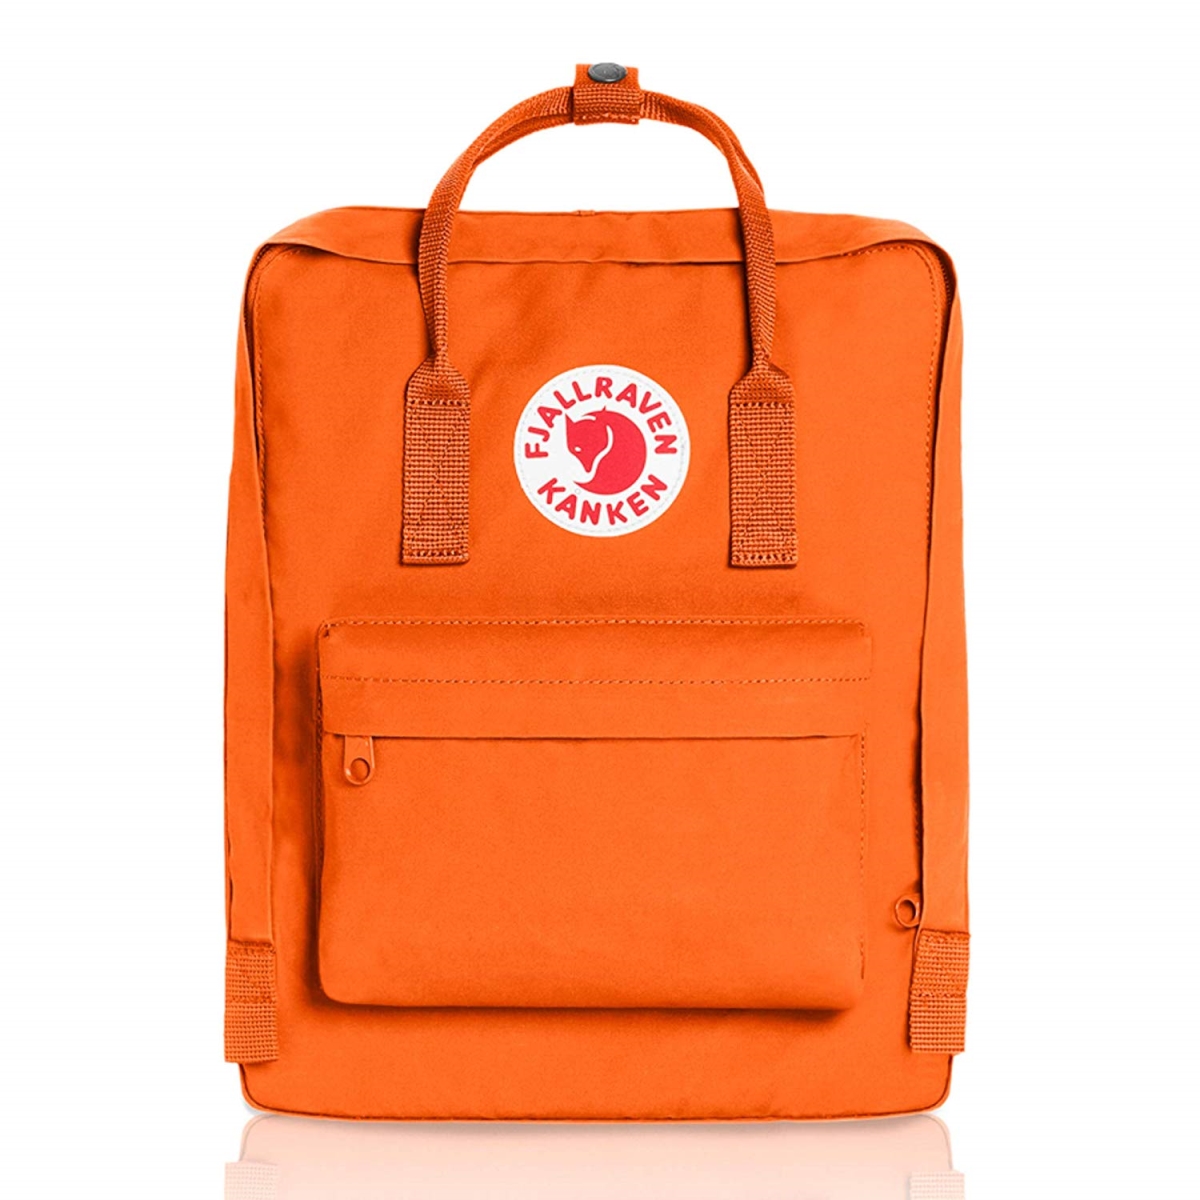 23510-212 Kanken Classic Backpack For Everyday, Burnt Orange